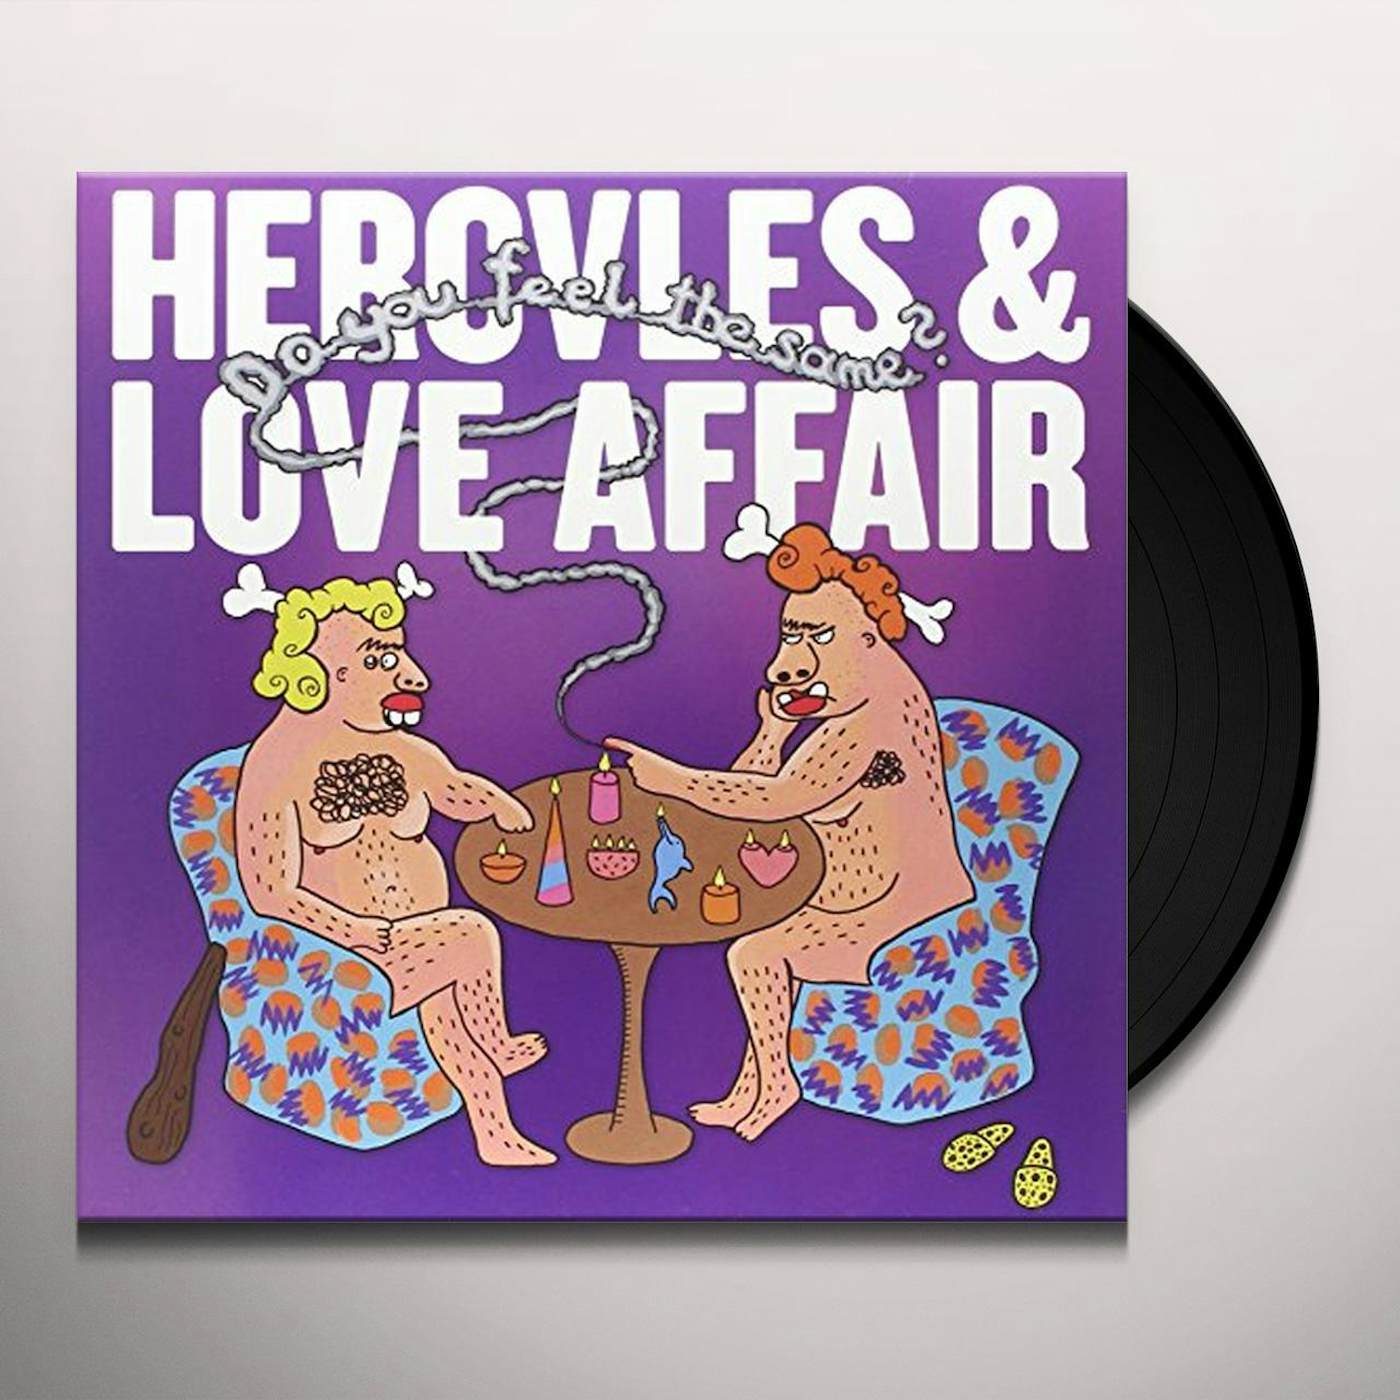 Hercules & Love Affair Do You Feel The Same? Vinyl Record